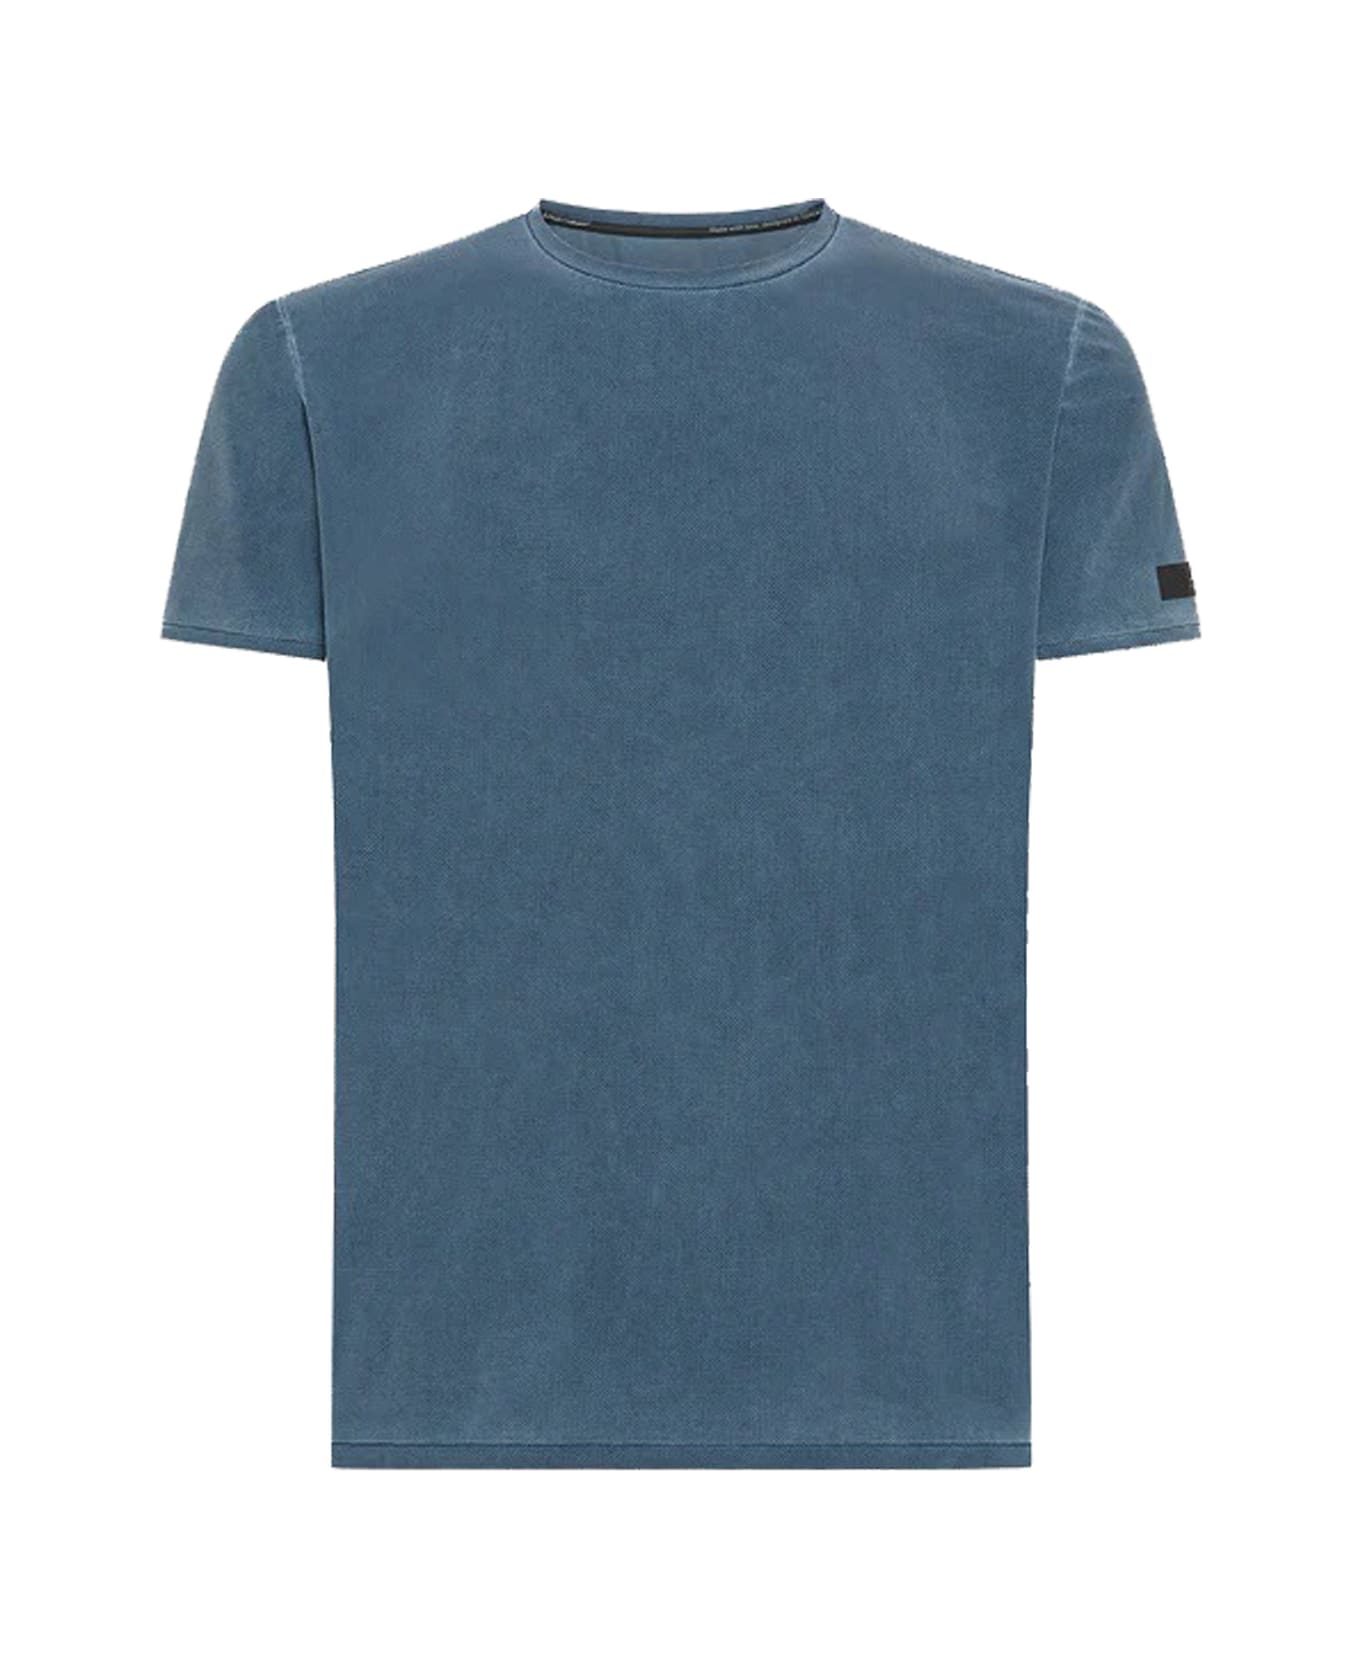 RRD - Roberto Ricci Design T-shirt - Blue